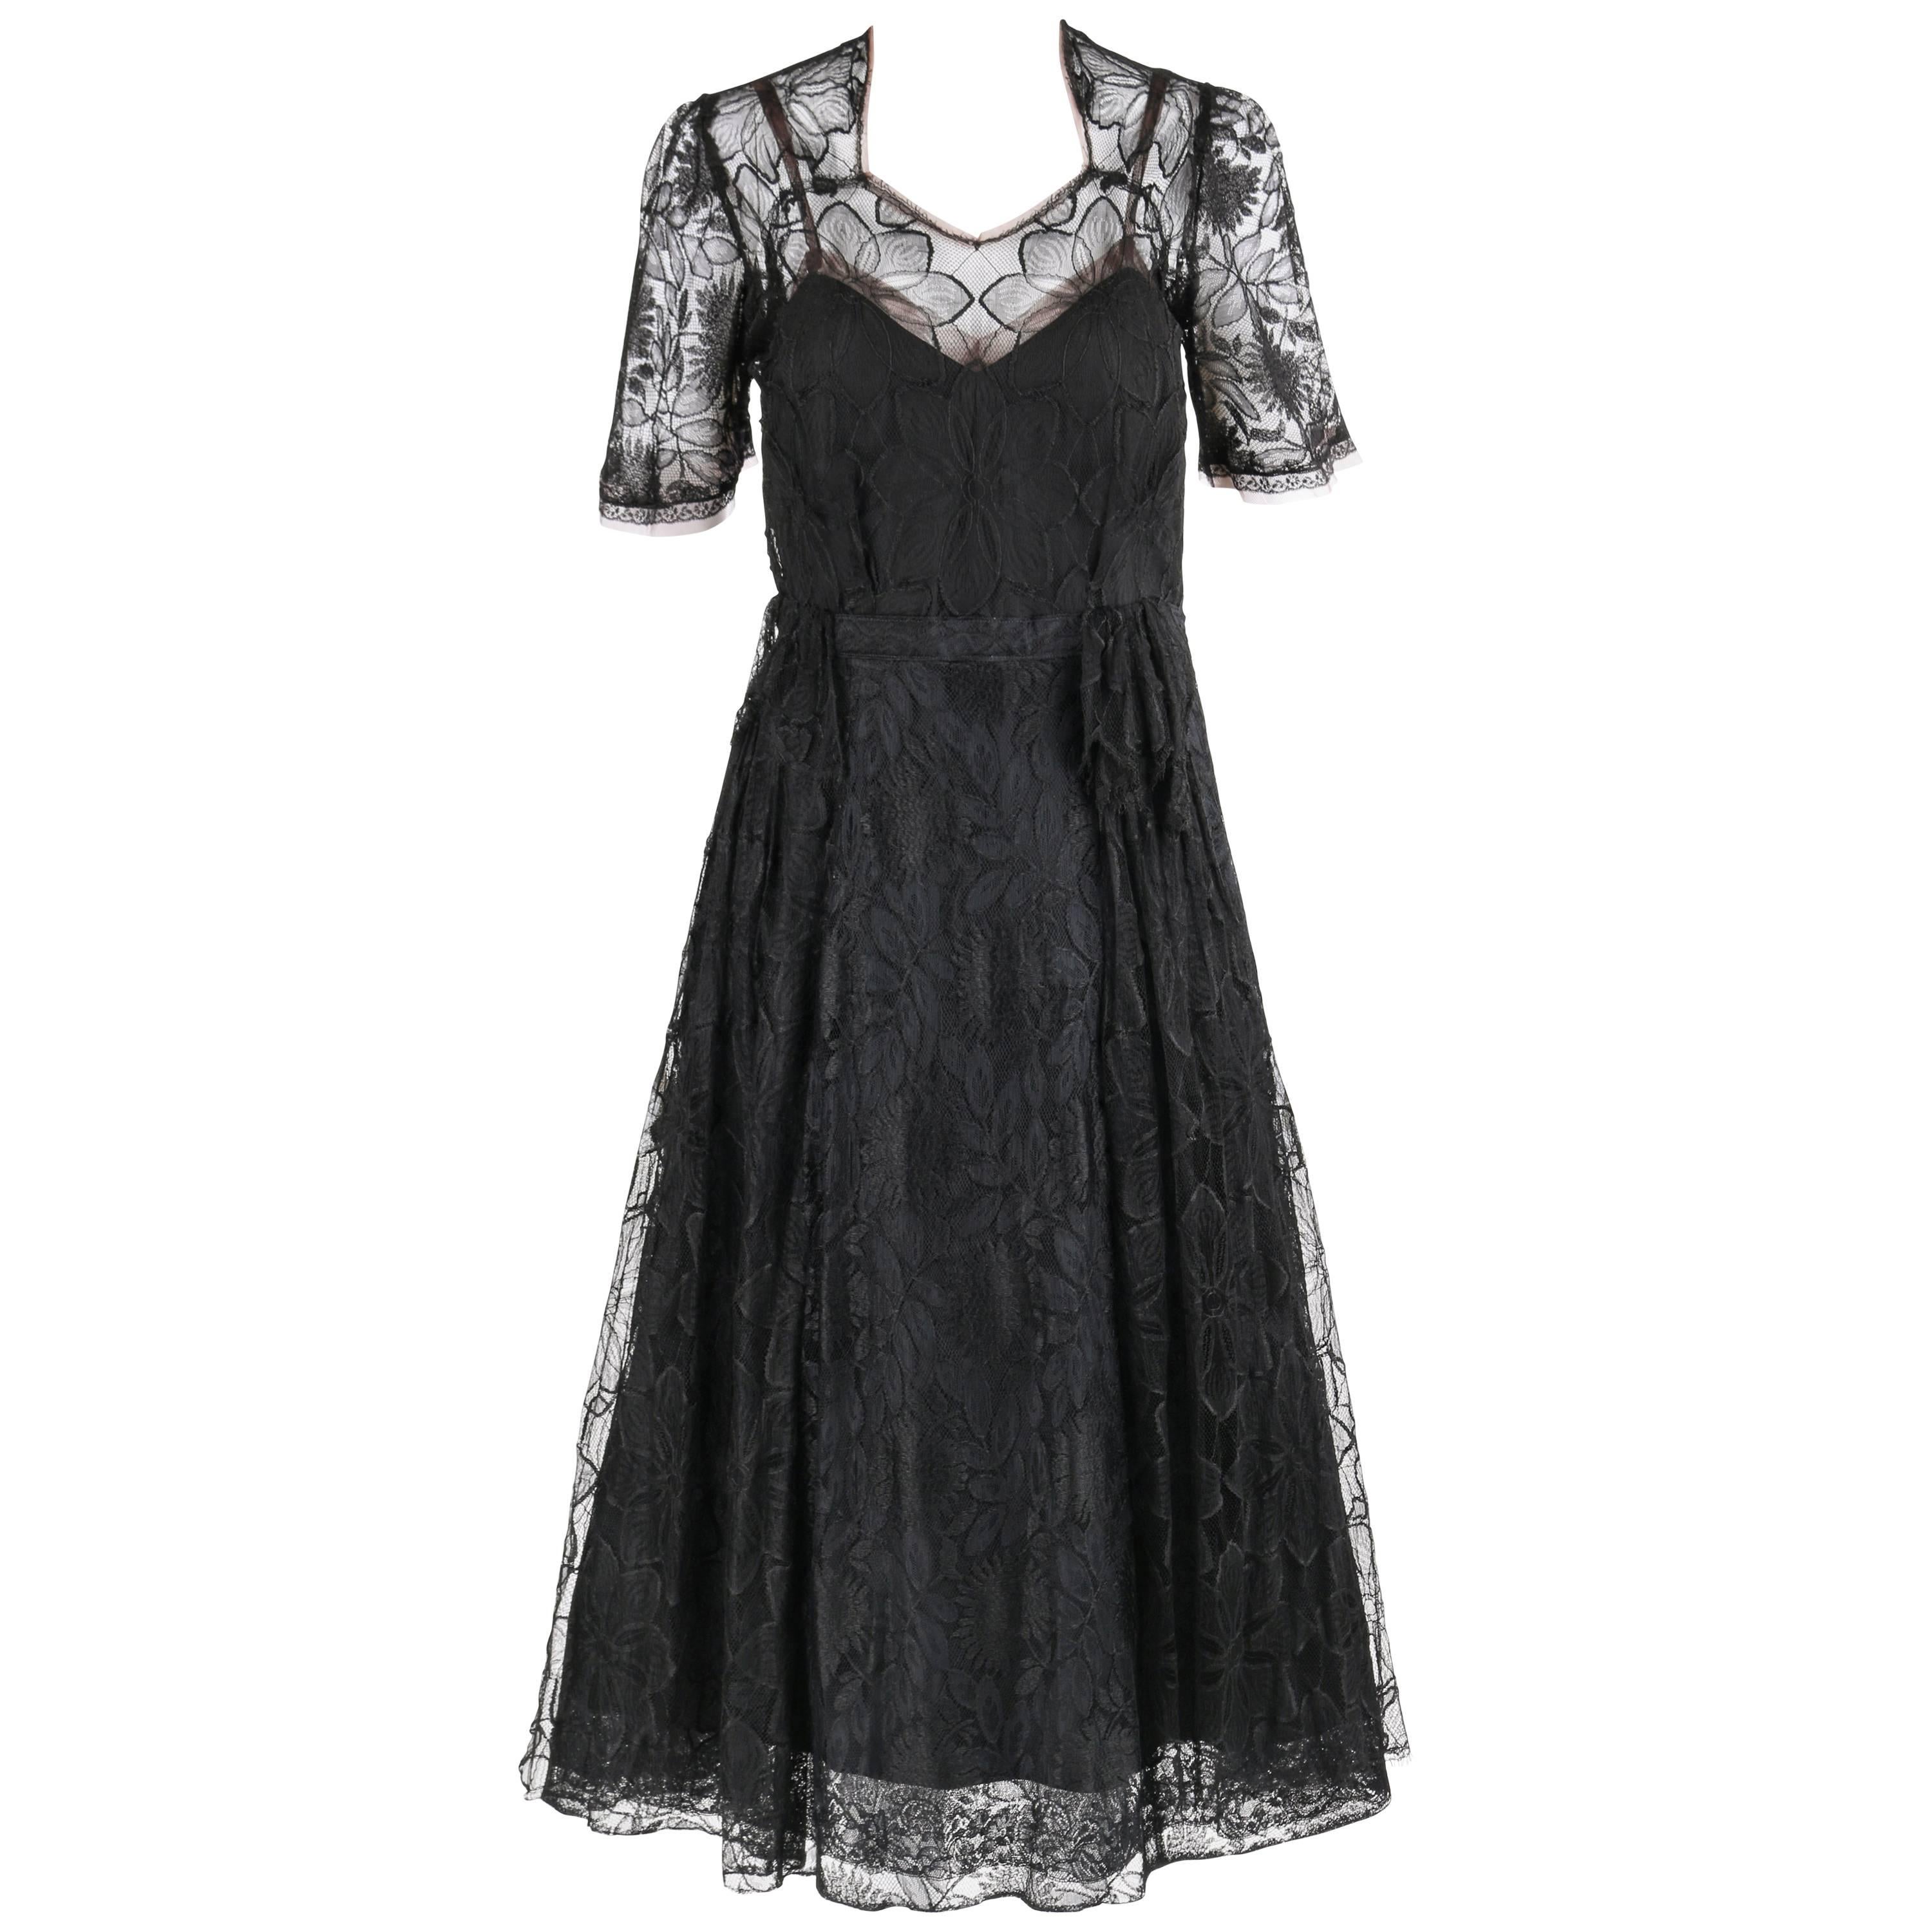 COUTURE c.1940's Black Floral Chantilly Lace Illusion Top Cocktail Dress